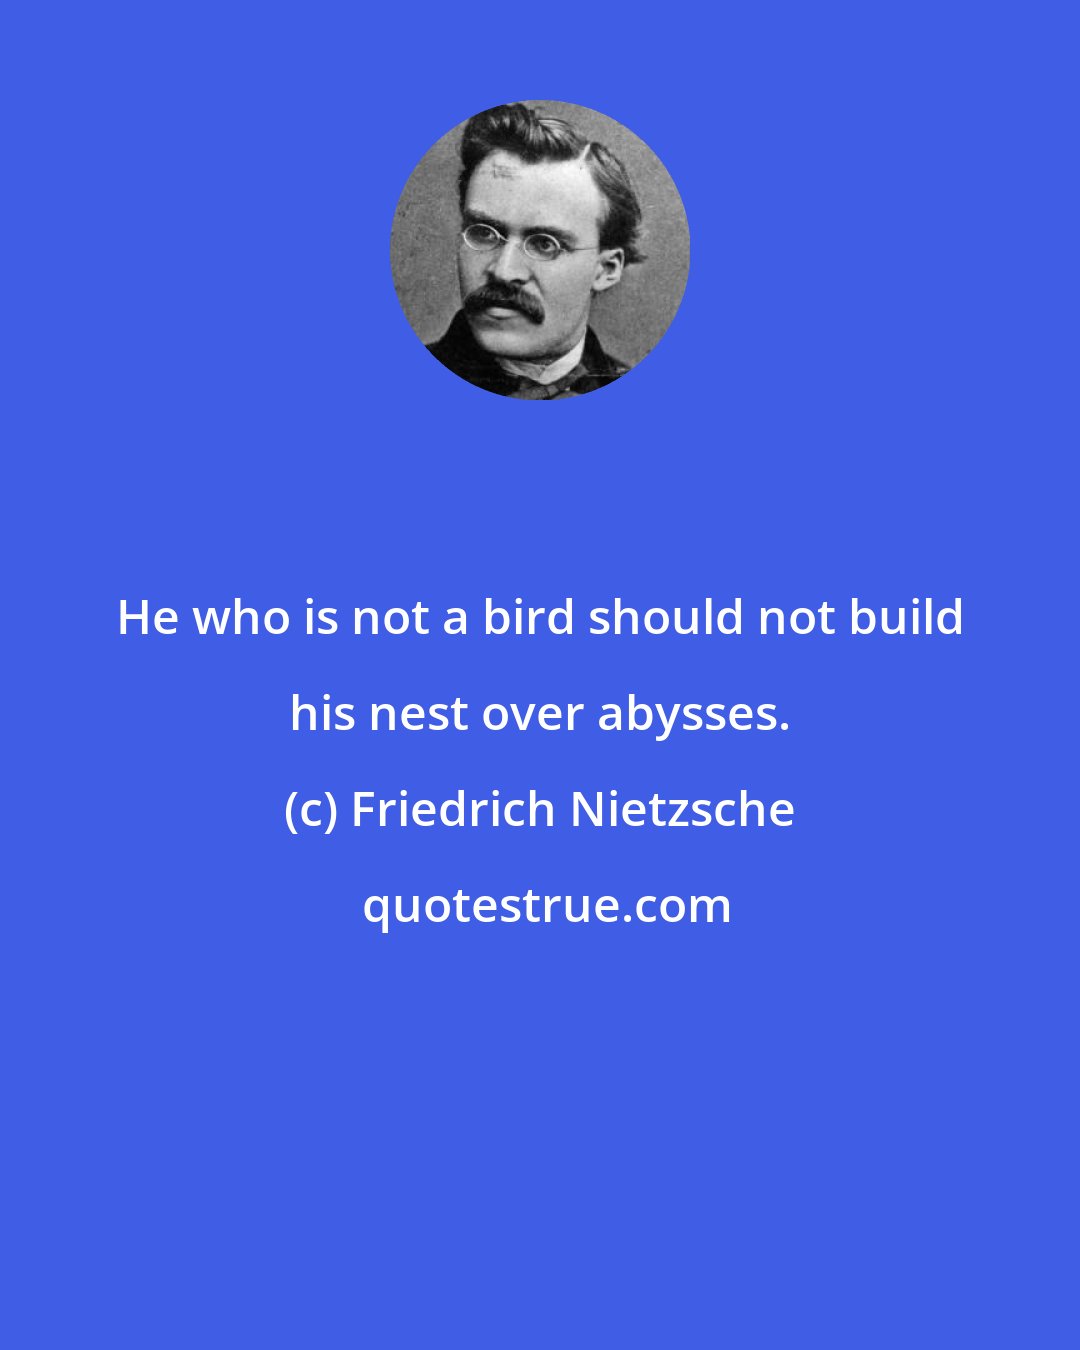 Friedrich Nietzsche: He who is not a bird should not build his nest over abysses.